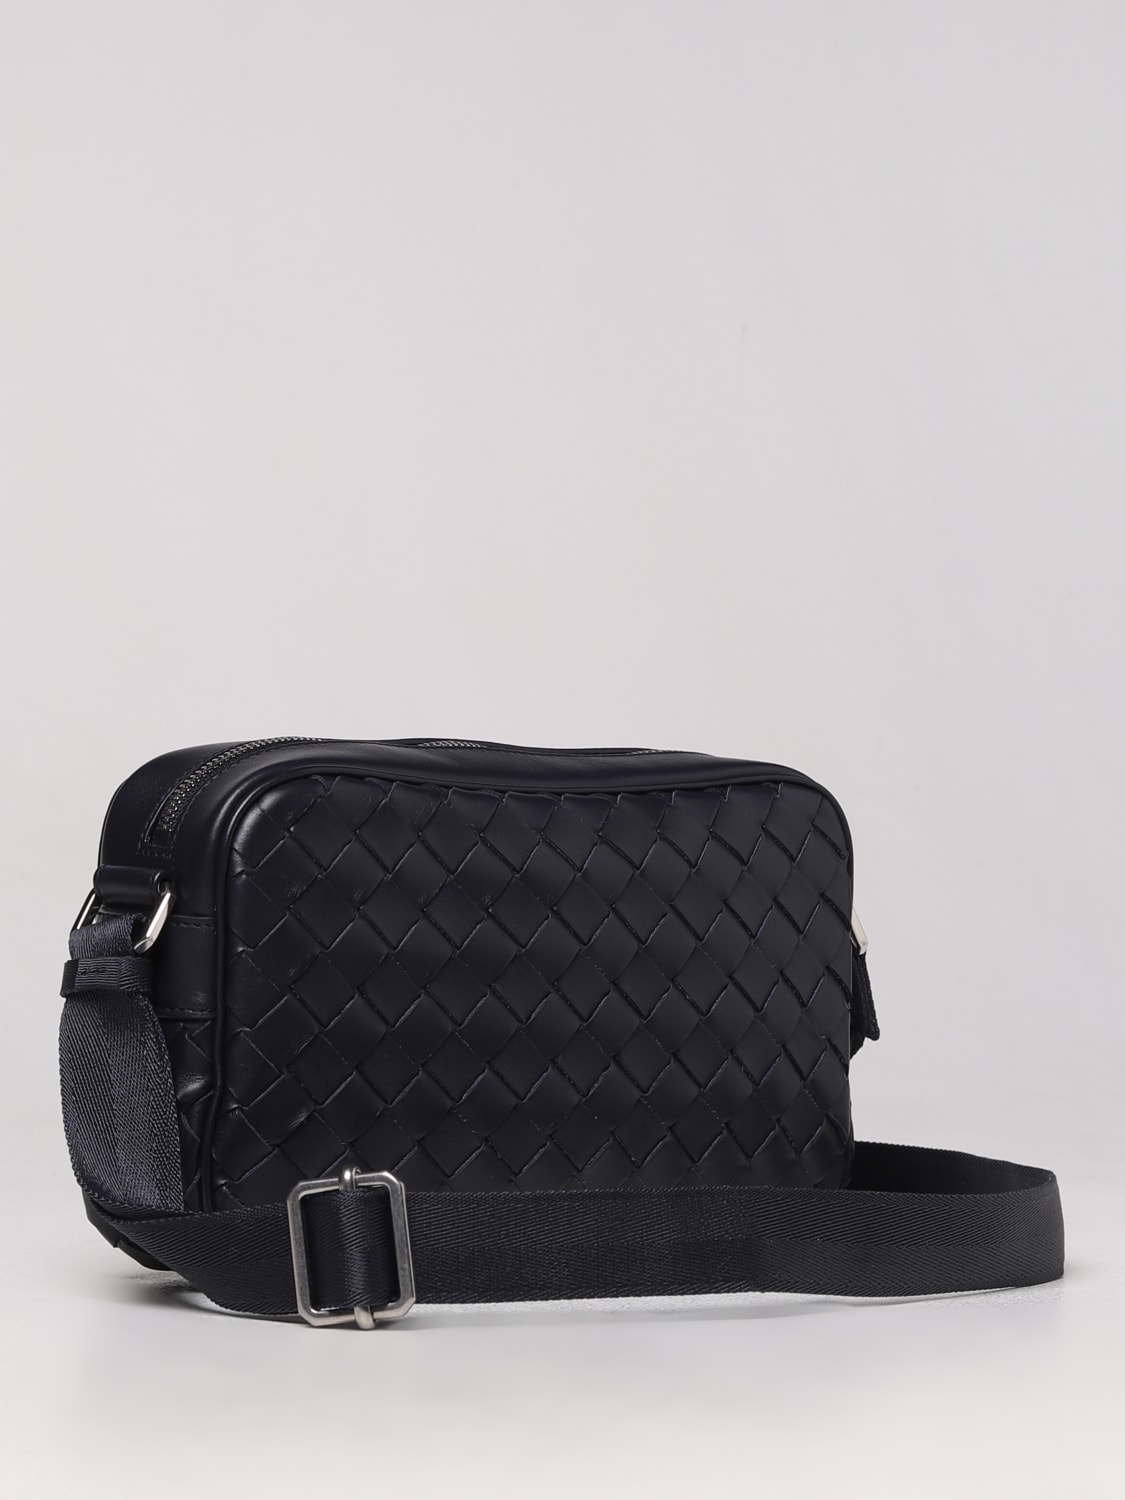 Bottega Veneta Outlet: bag in woven leather - Beige  Bottega Veneta  shoulder bag 710048V2E42 online at